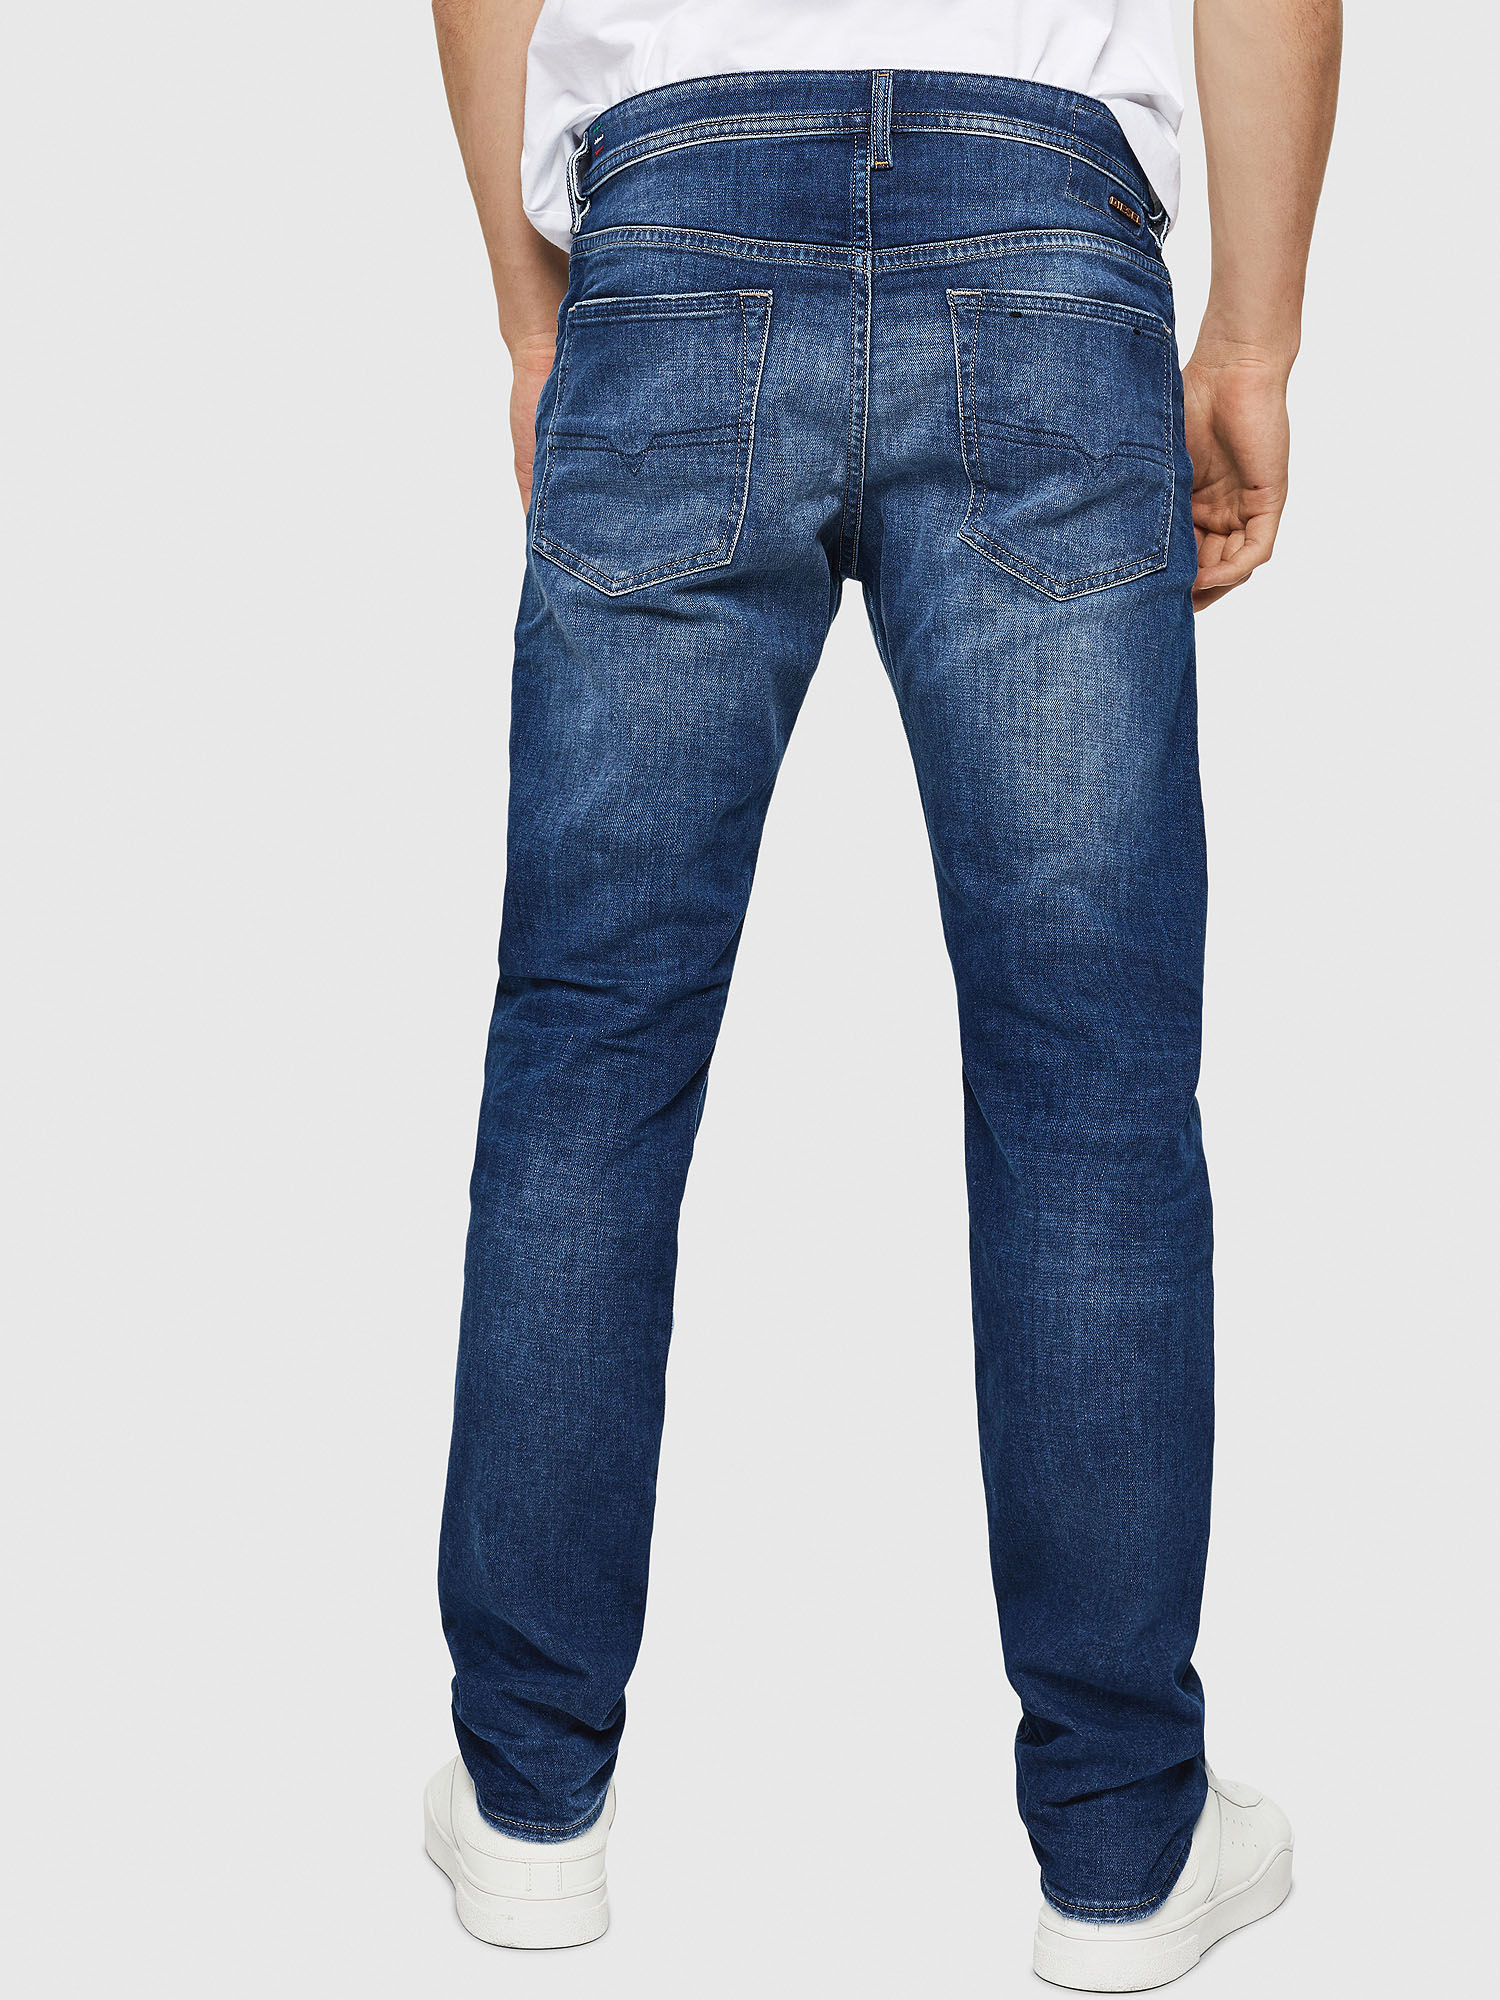 Let pelleten Svare Buster Slim Jeans 084SZ: Medium Blue Wash, Treated, Stretch Fabric